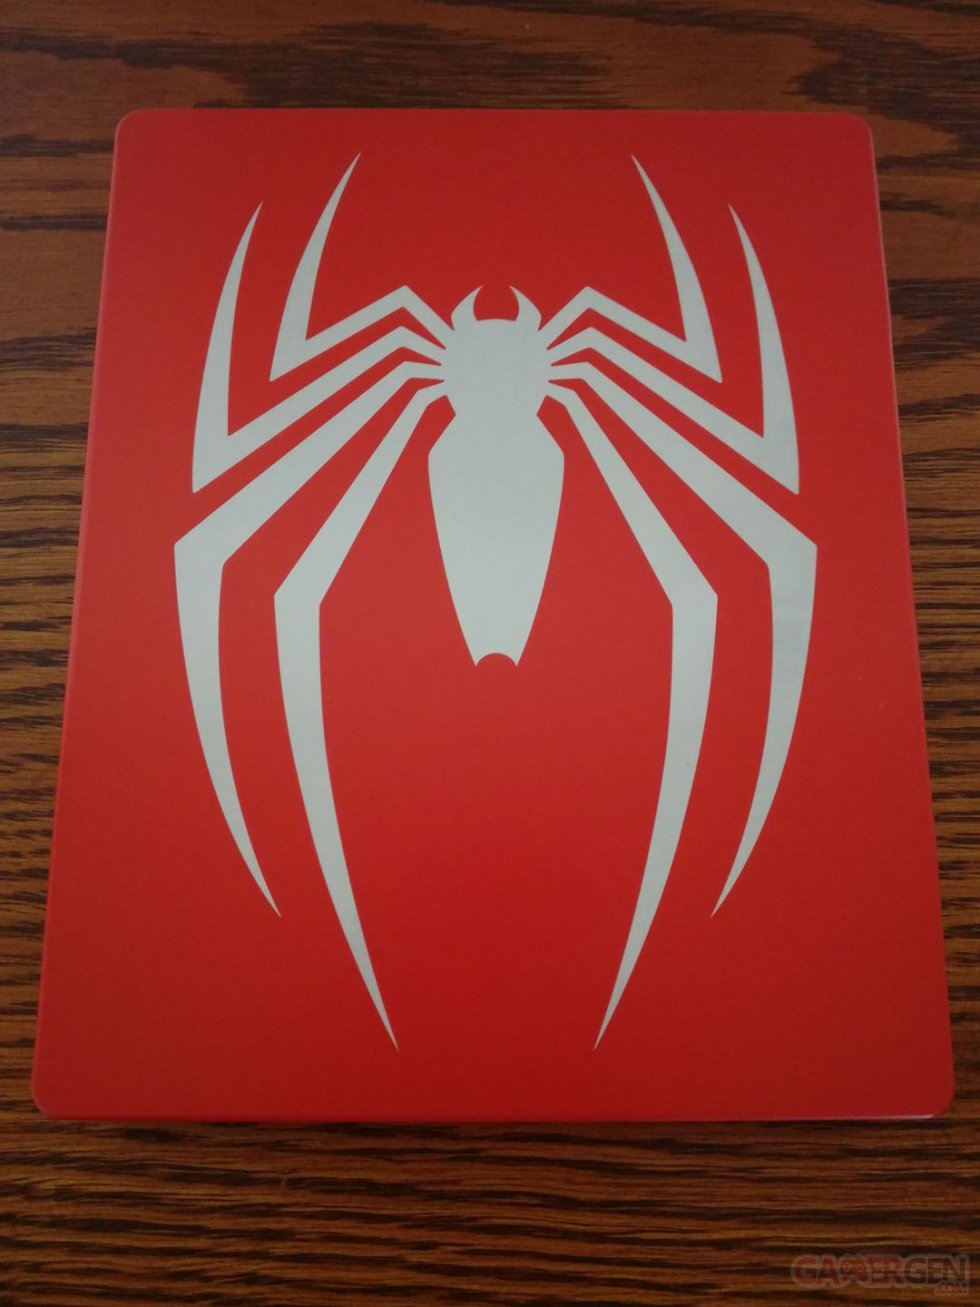 Spider-Man-collector-unboxing-déballage-10-09-09-2018